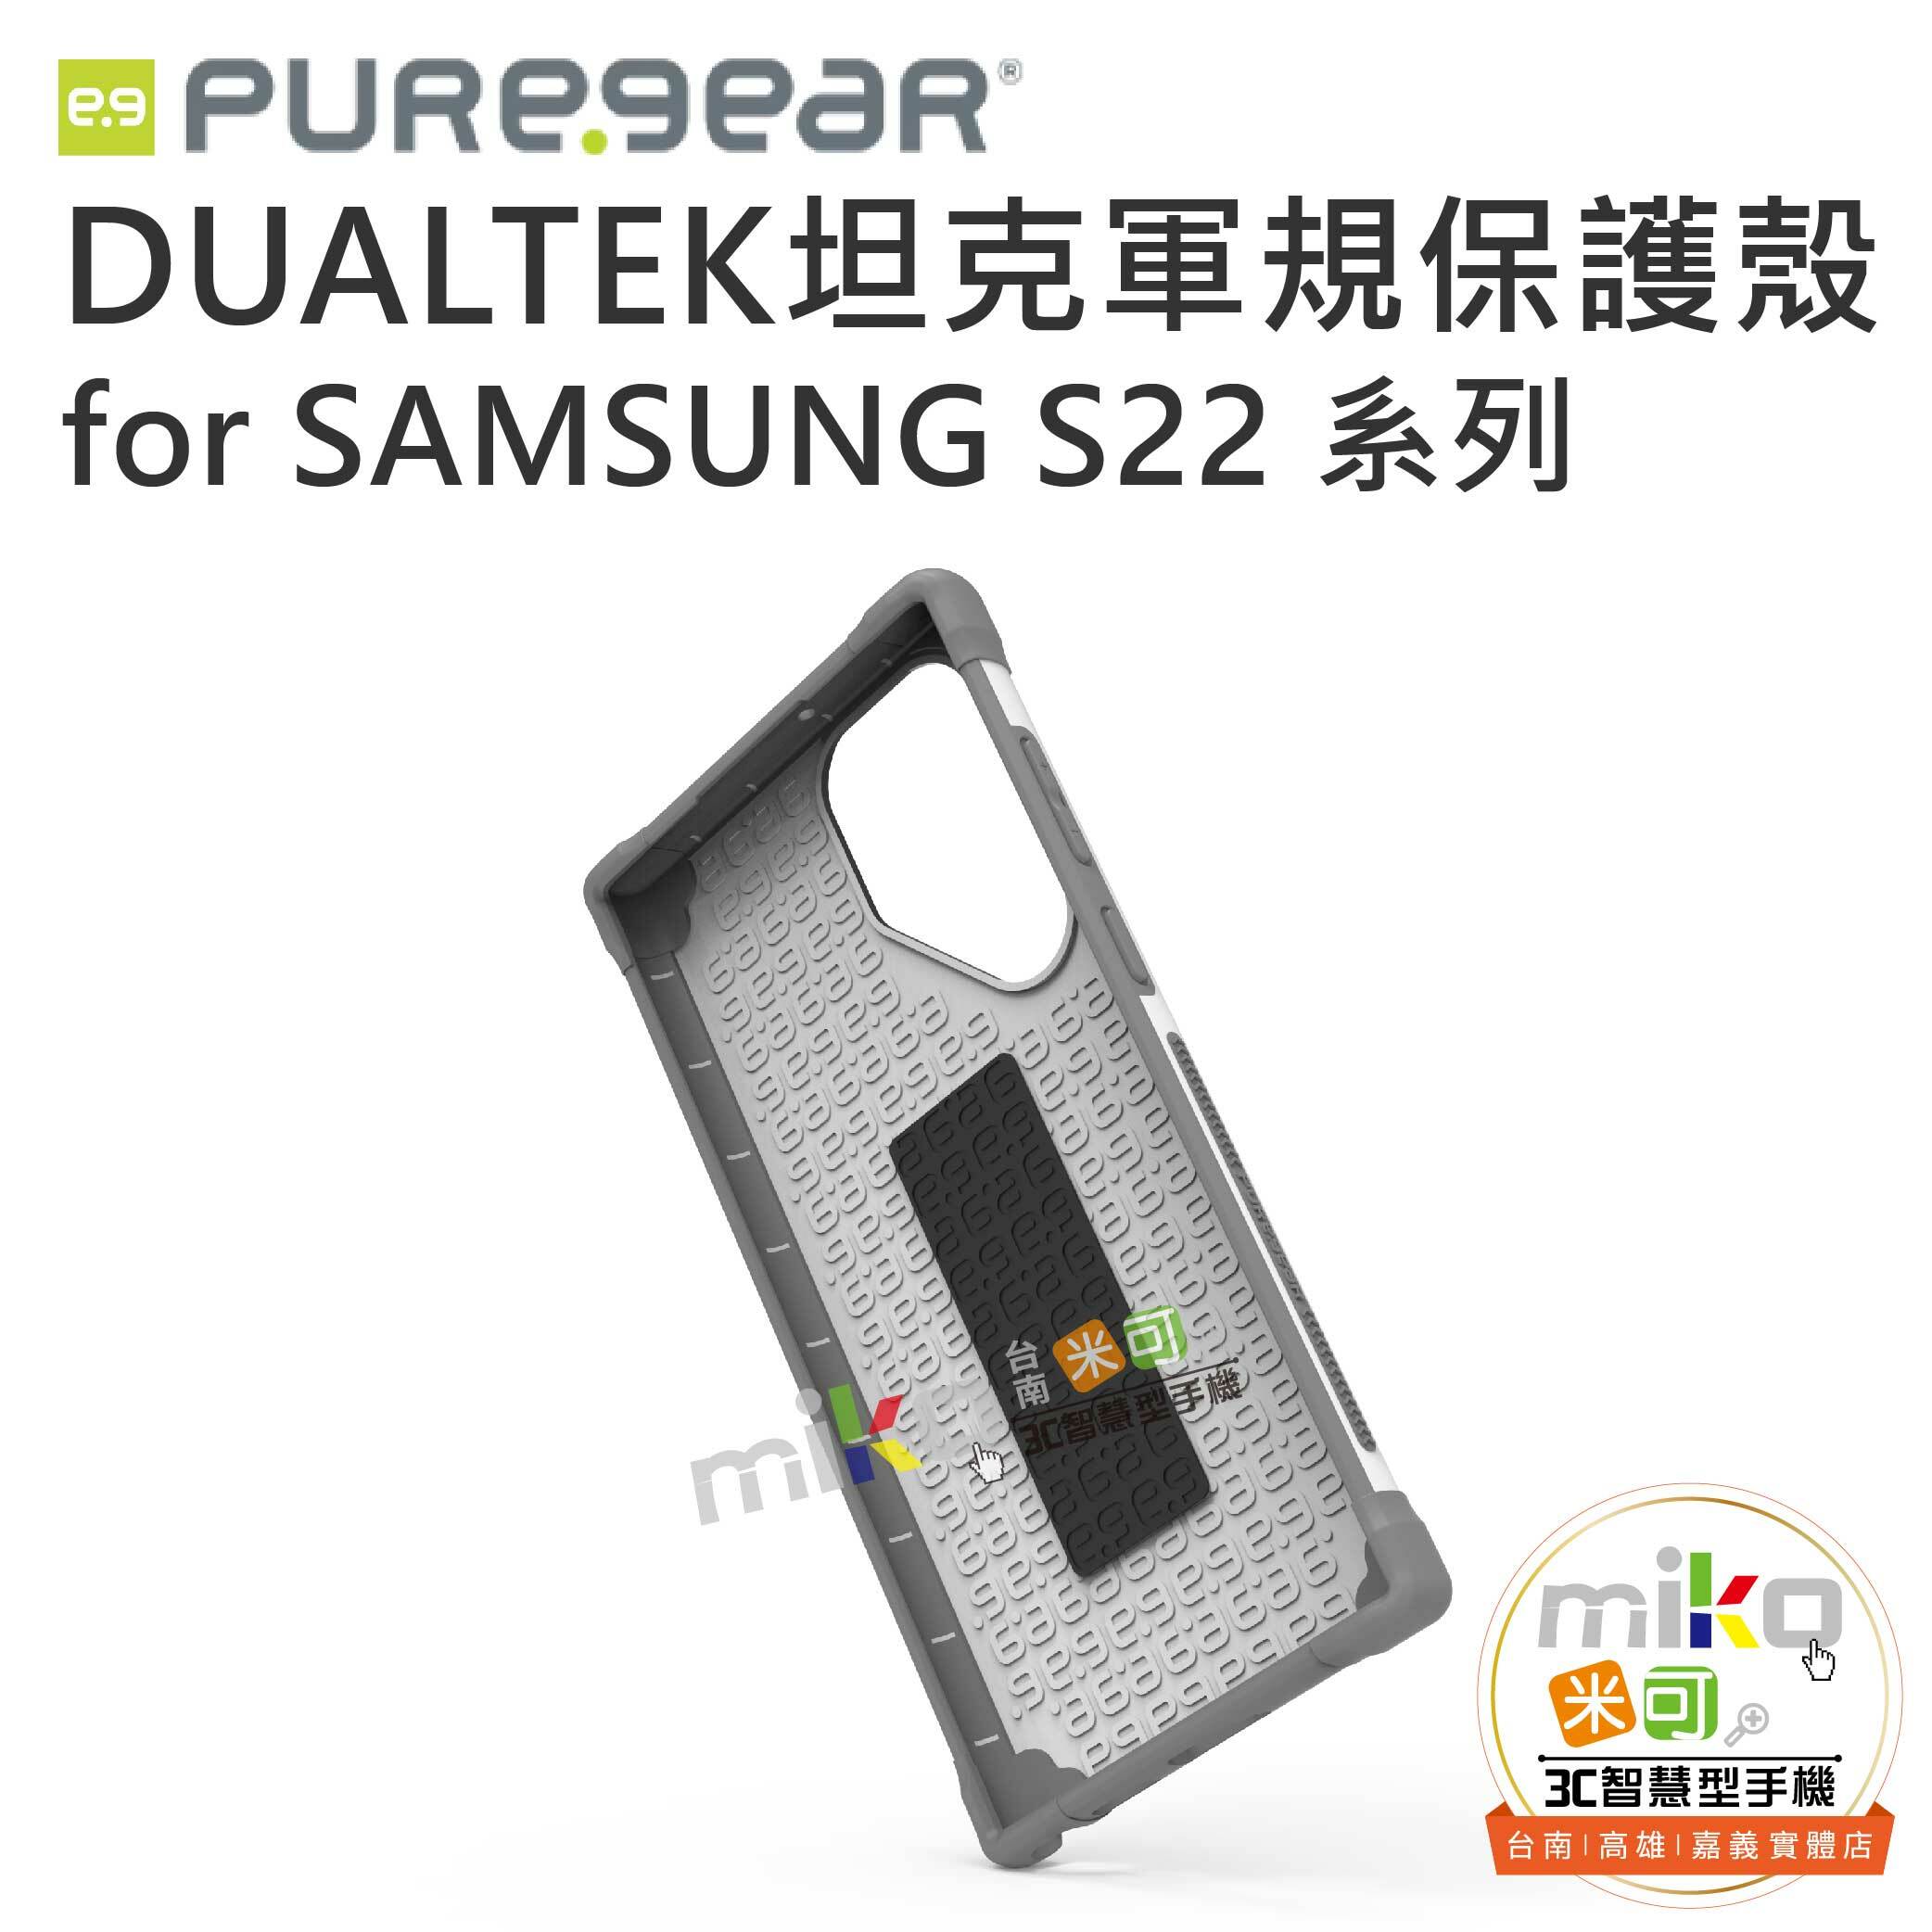 PureGear Samsung Galaxy S22 plus DualTek - Arctic White